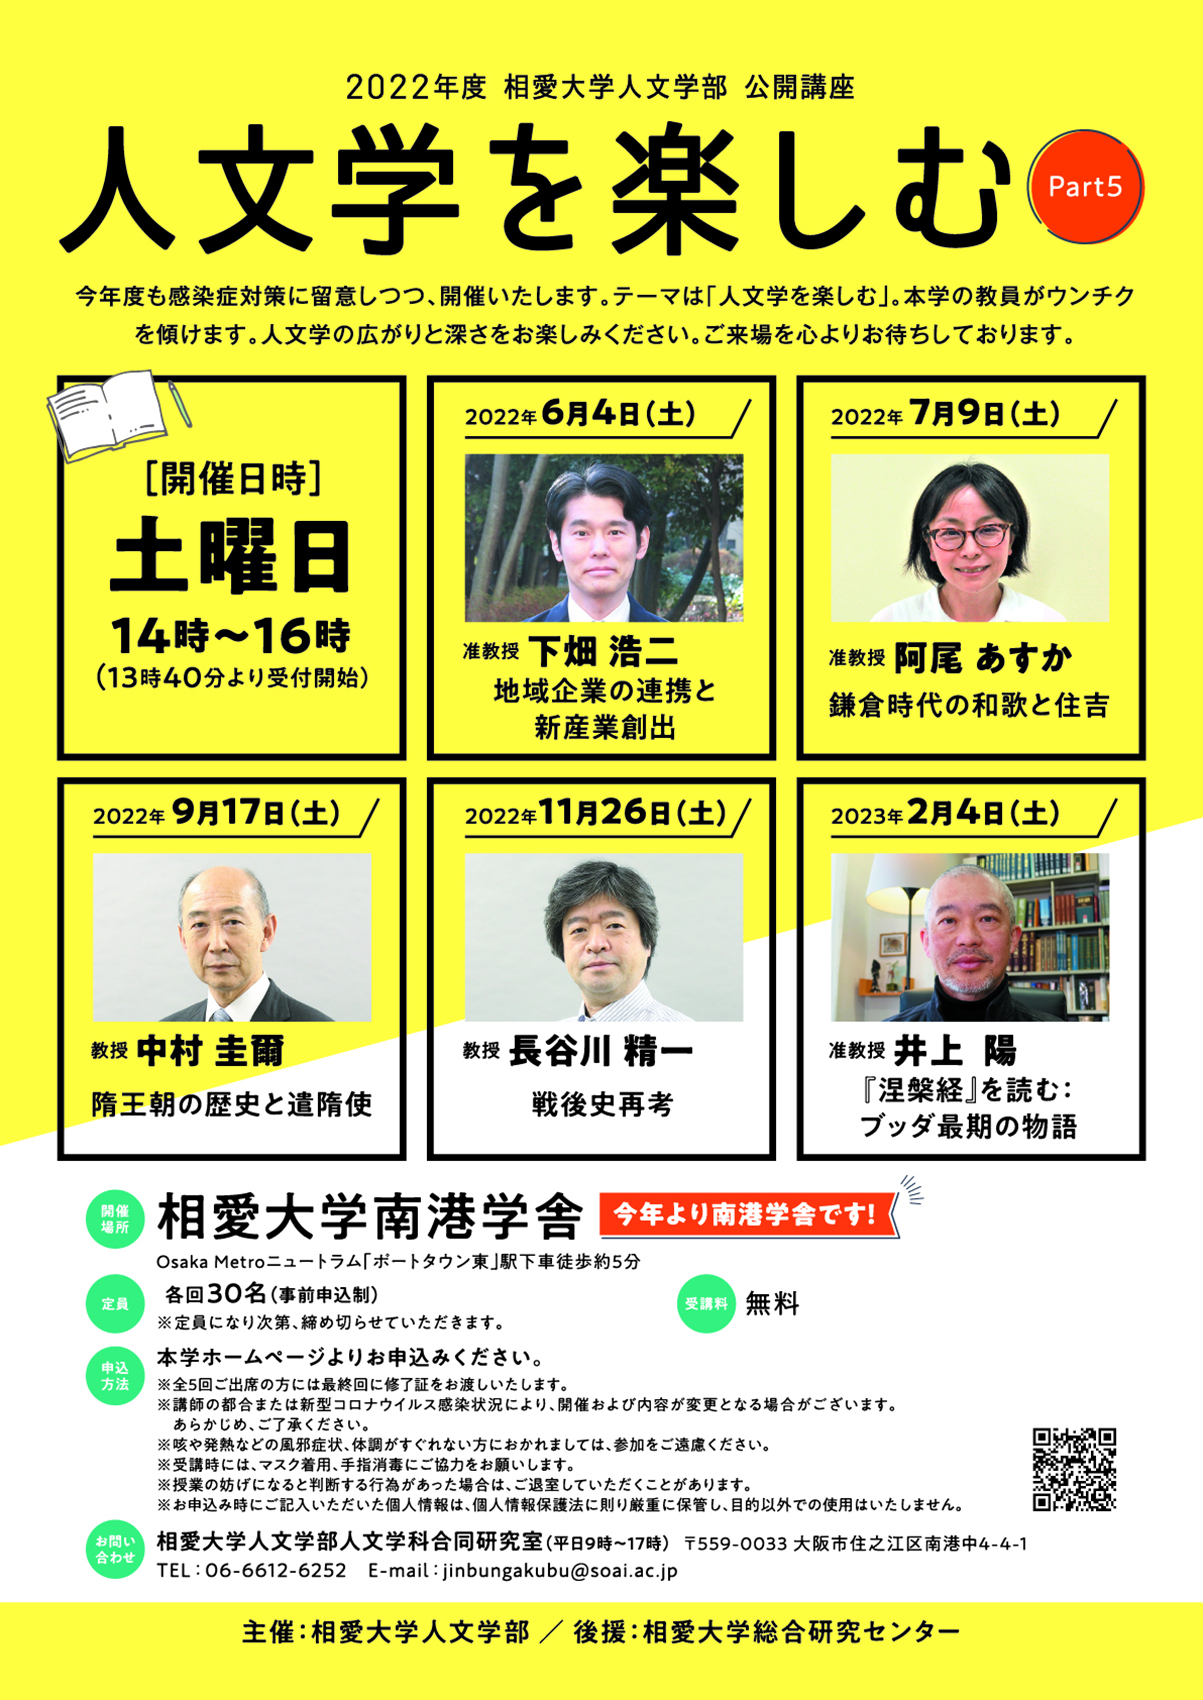 https://www.soai.ac.jp/information/event/jinbungaku_2022.jpg